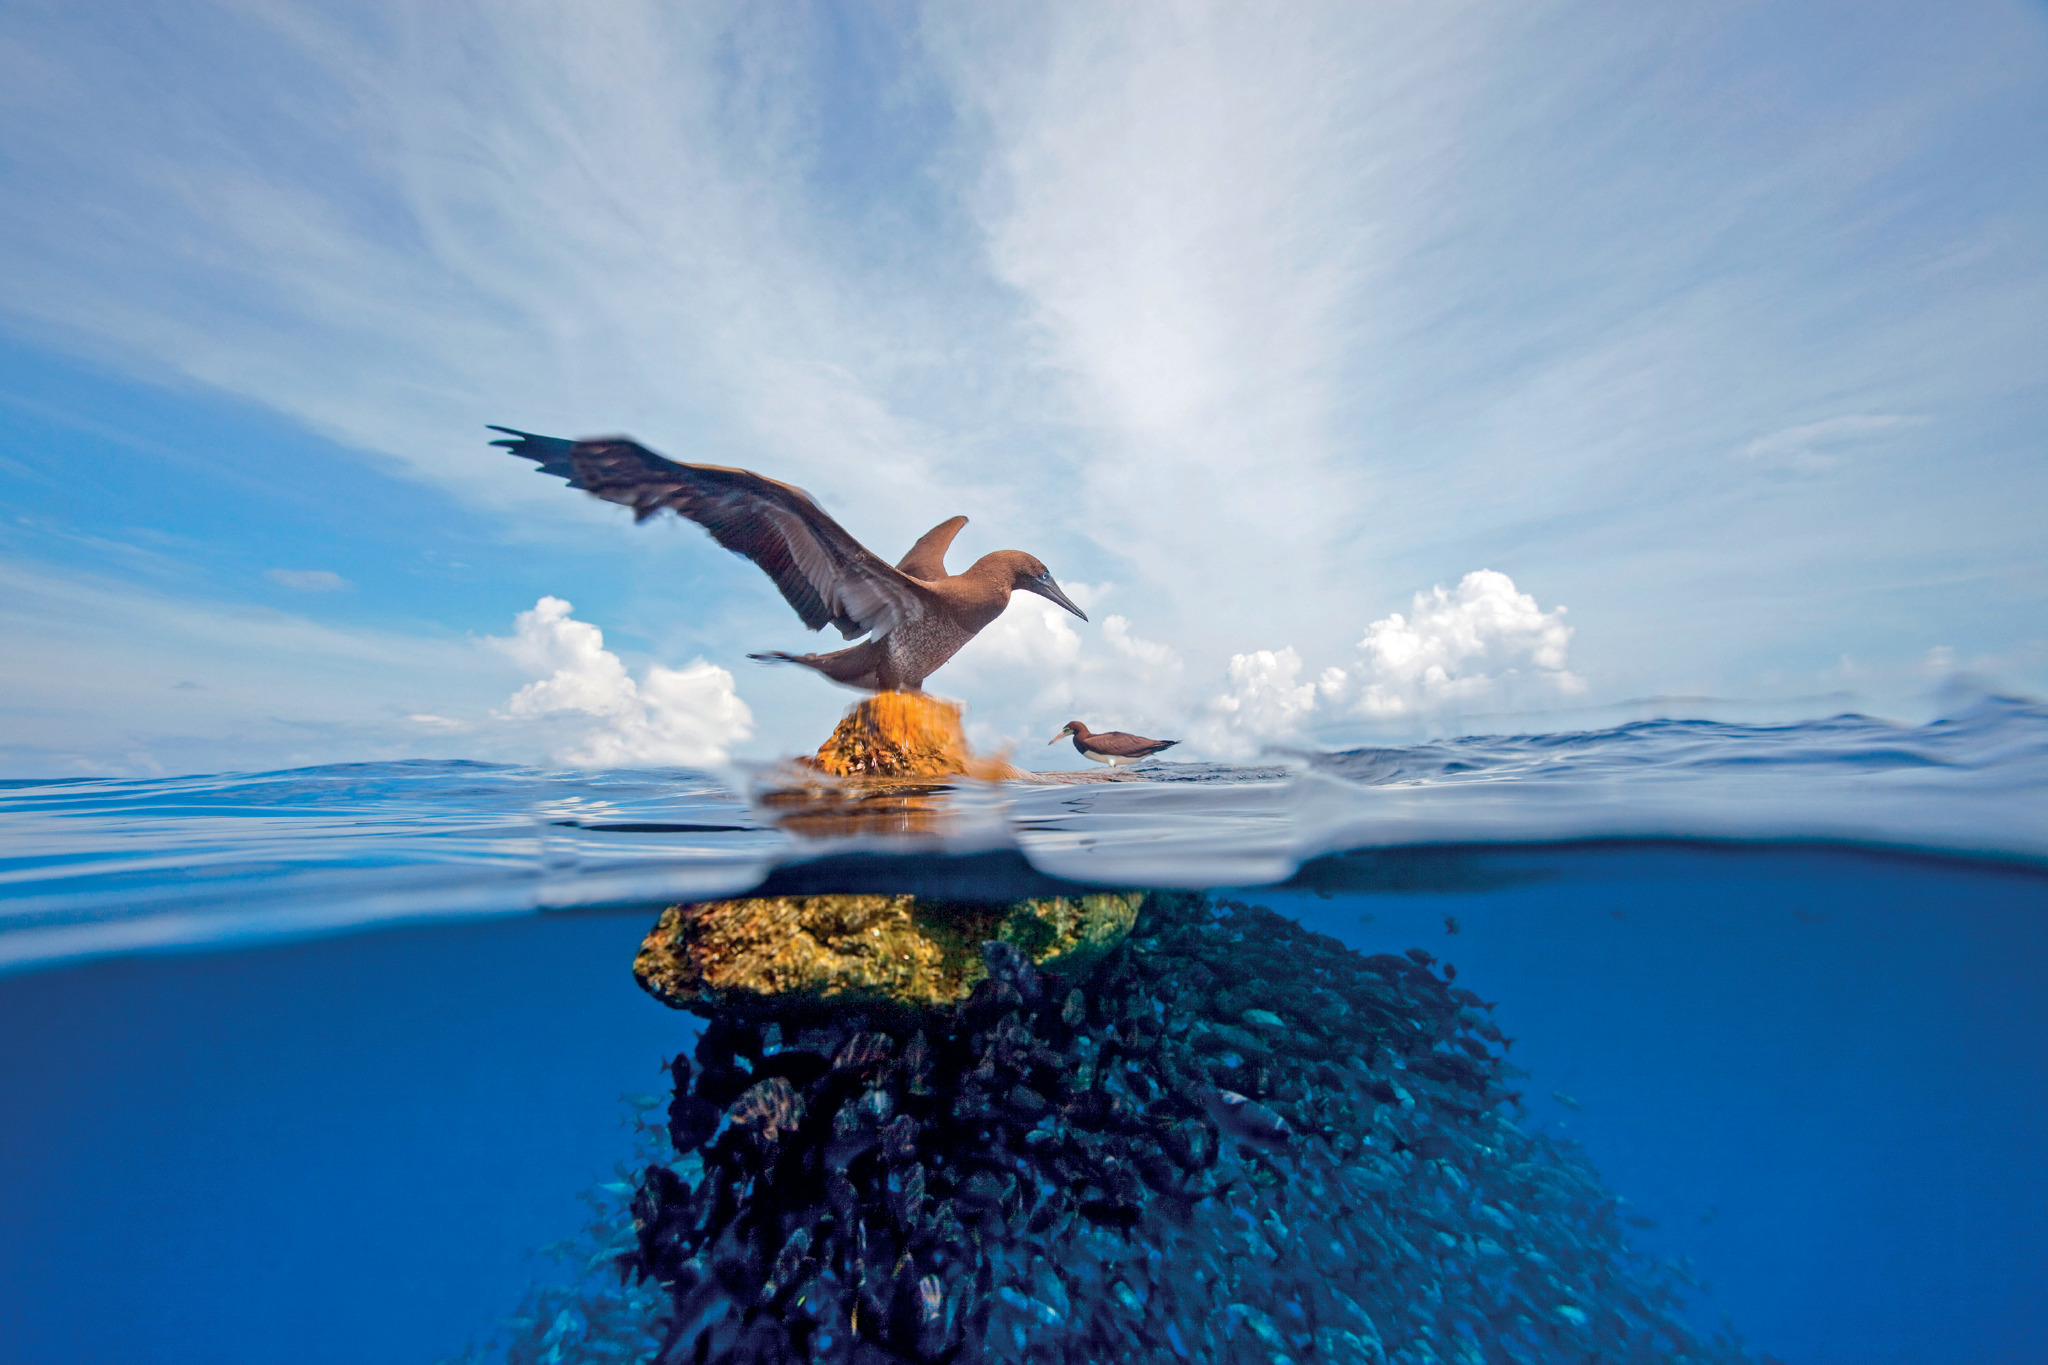 Noticia - Photo Book Compiles Wonders of Cocos Island